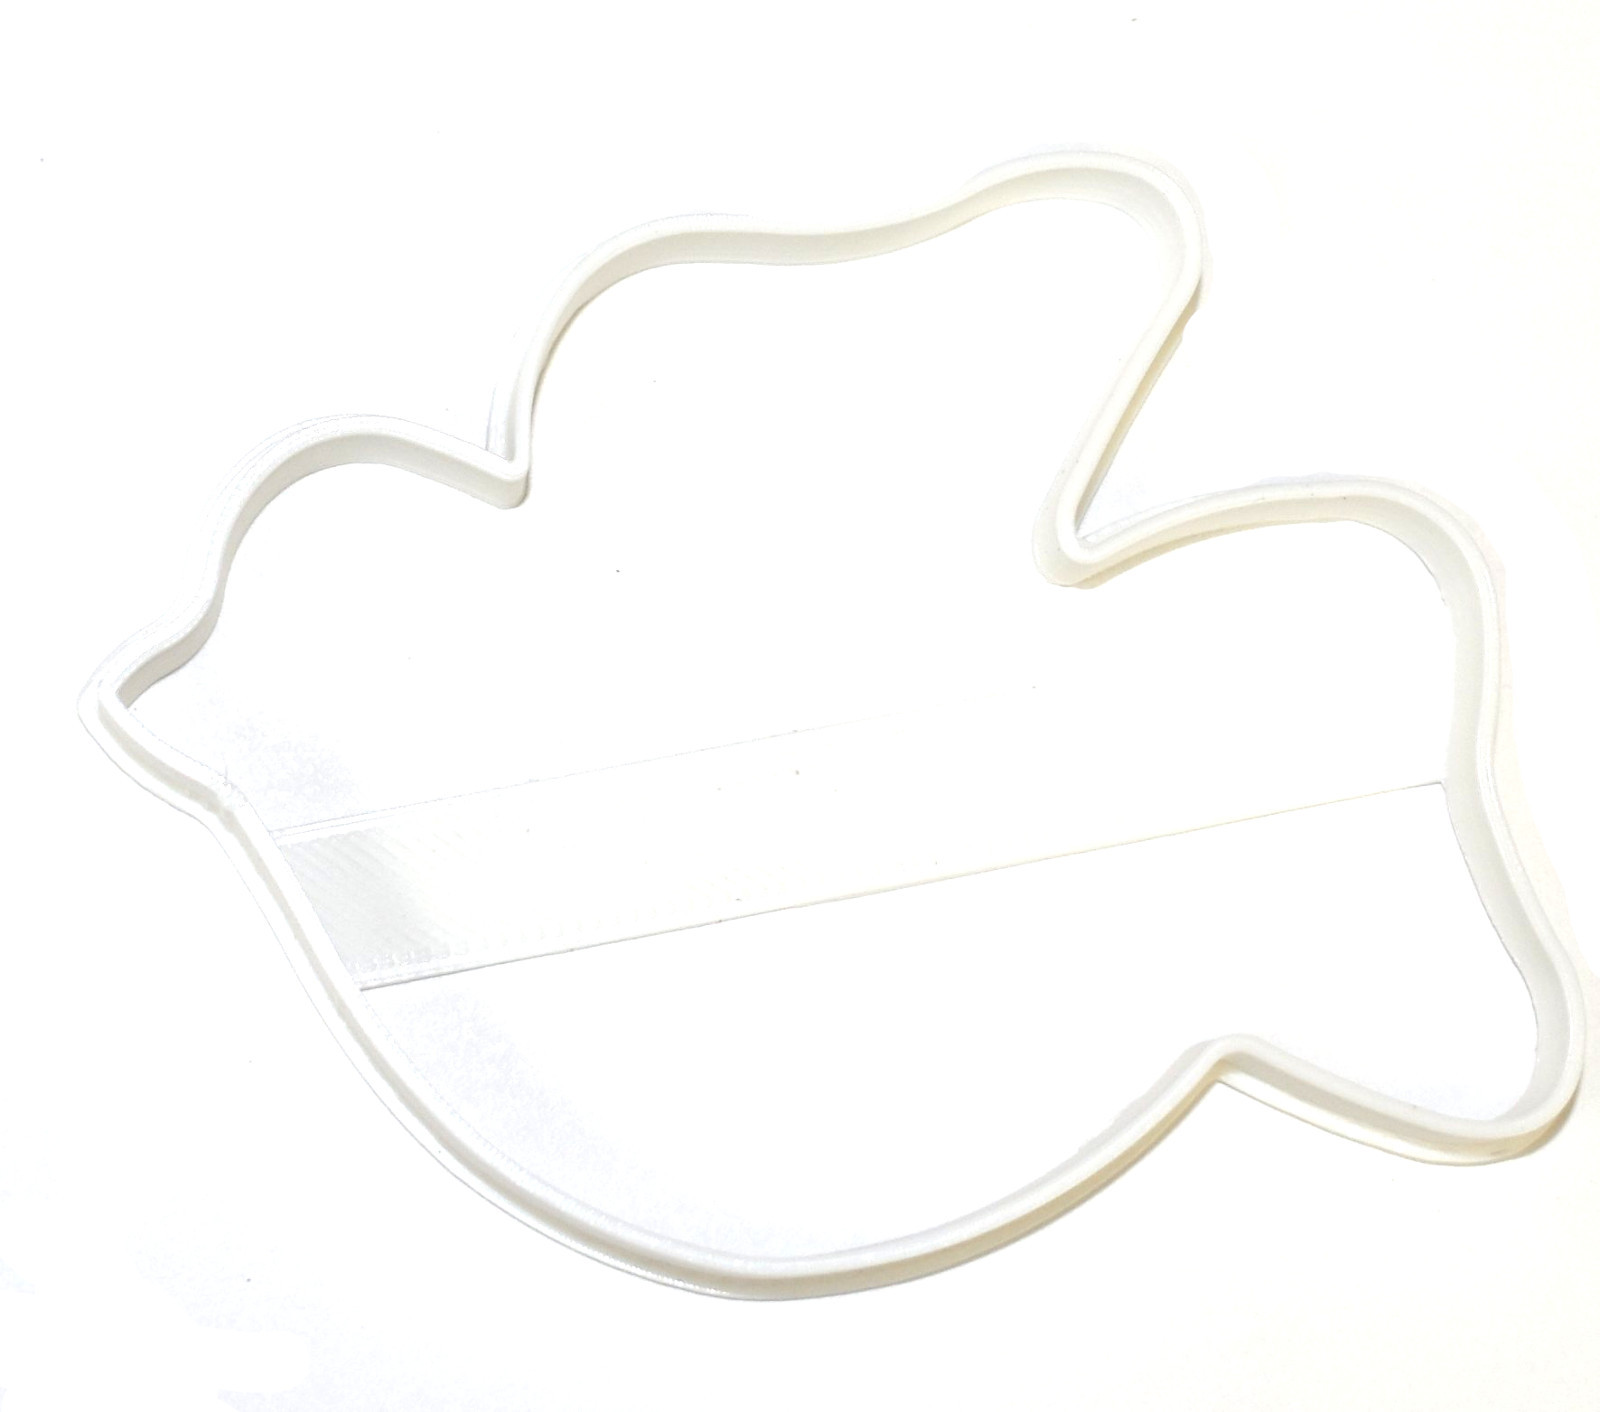 Dove White Bird Messenger Symbol Love Peace Cookie Cutter 3D Printed USA PR754